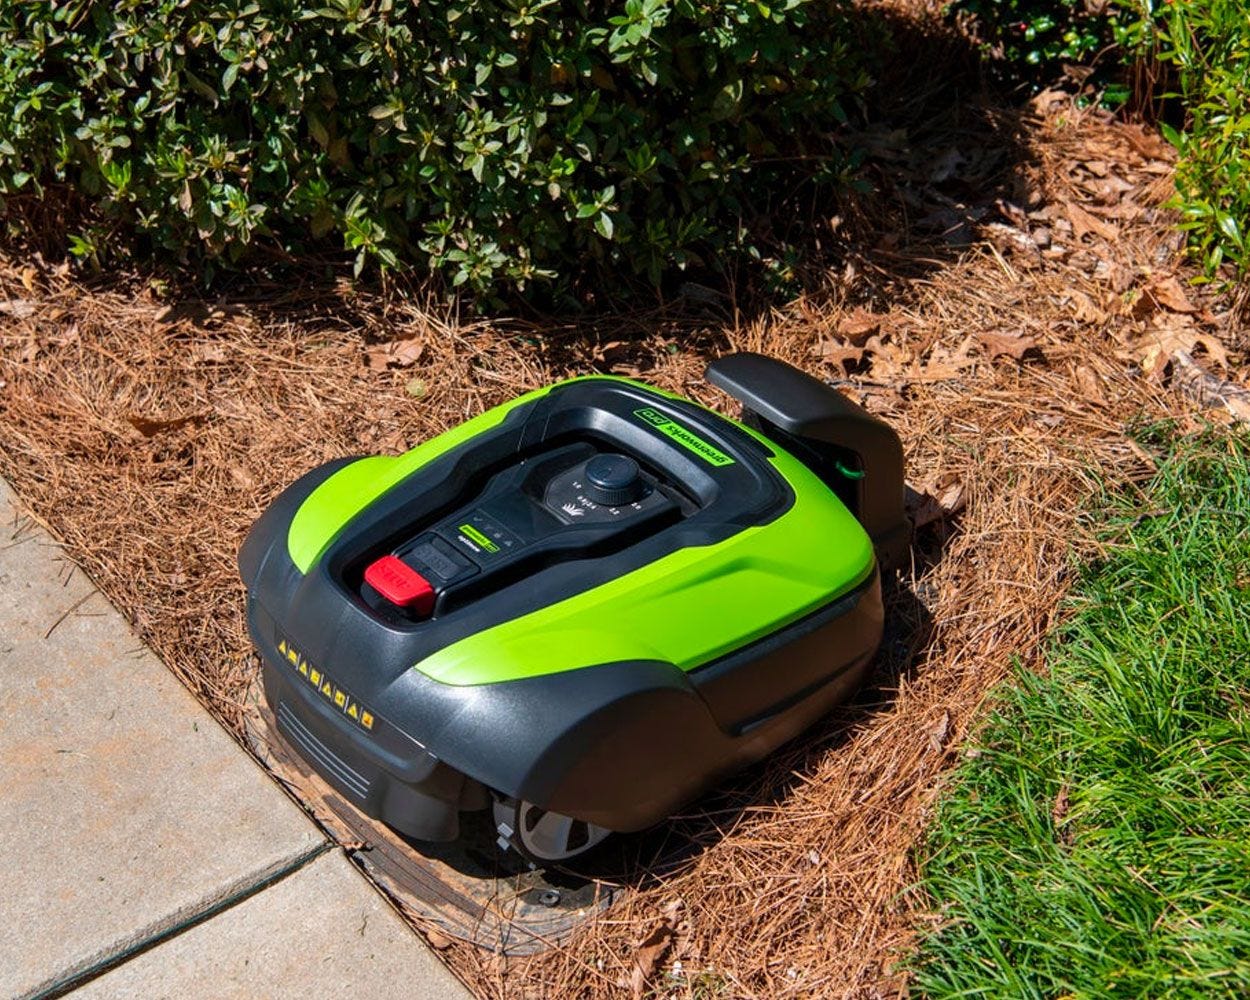 optimow® 50H Robotic Lawn Mower